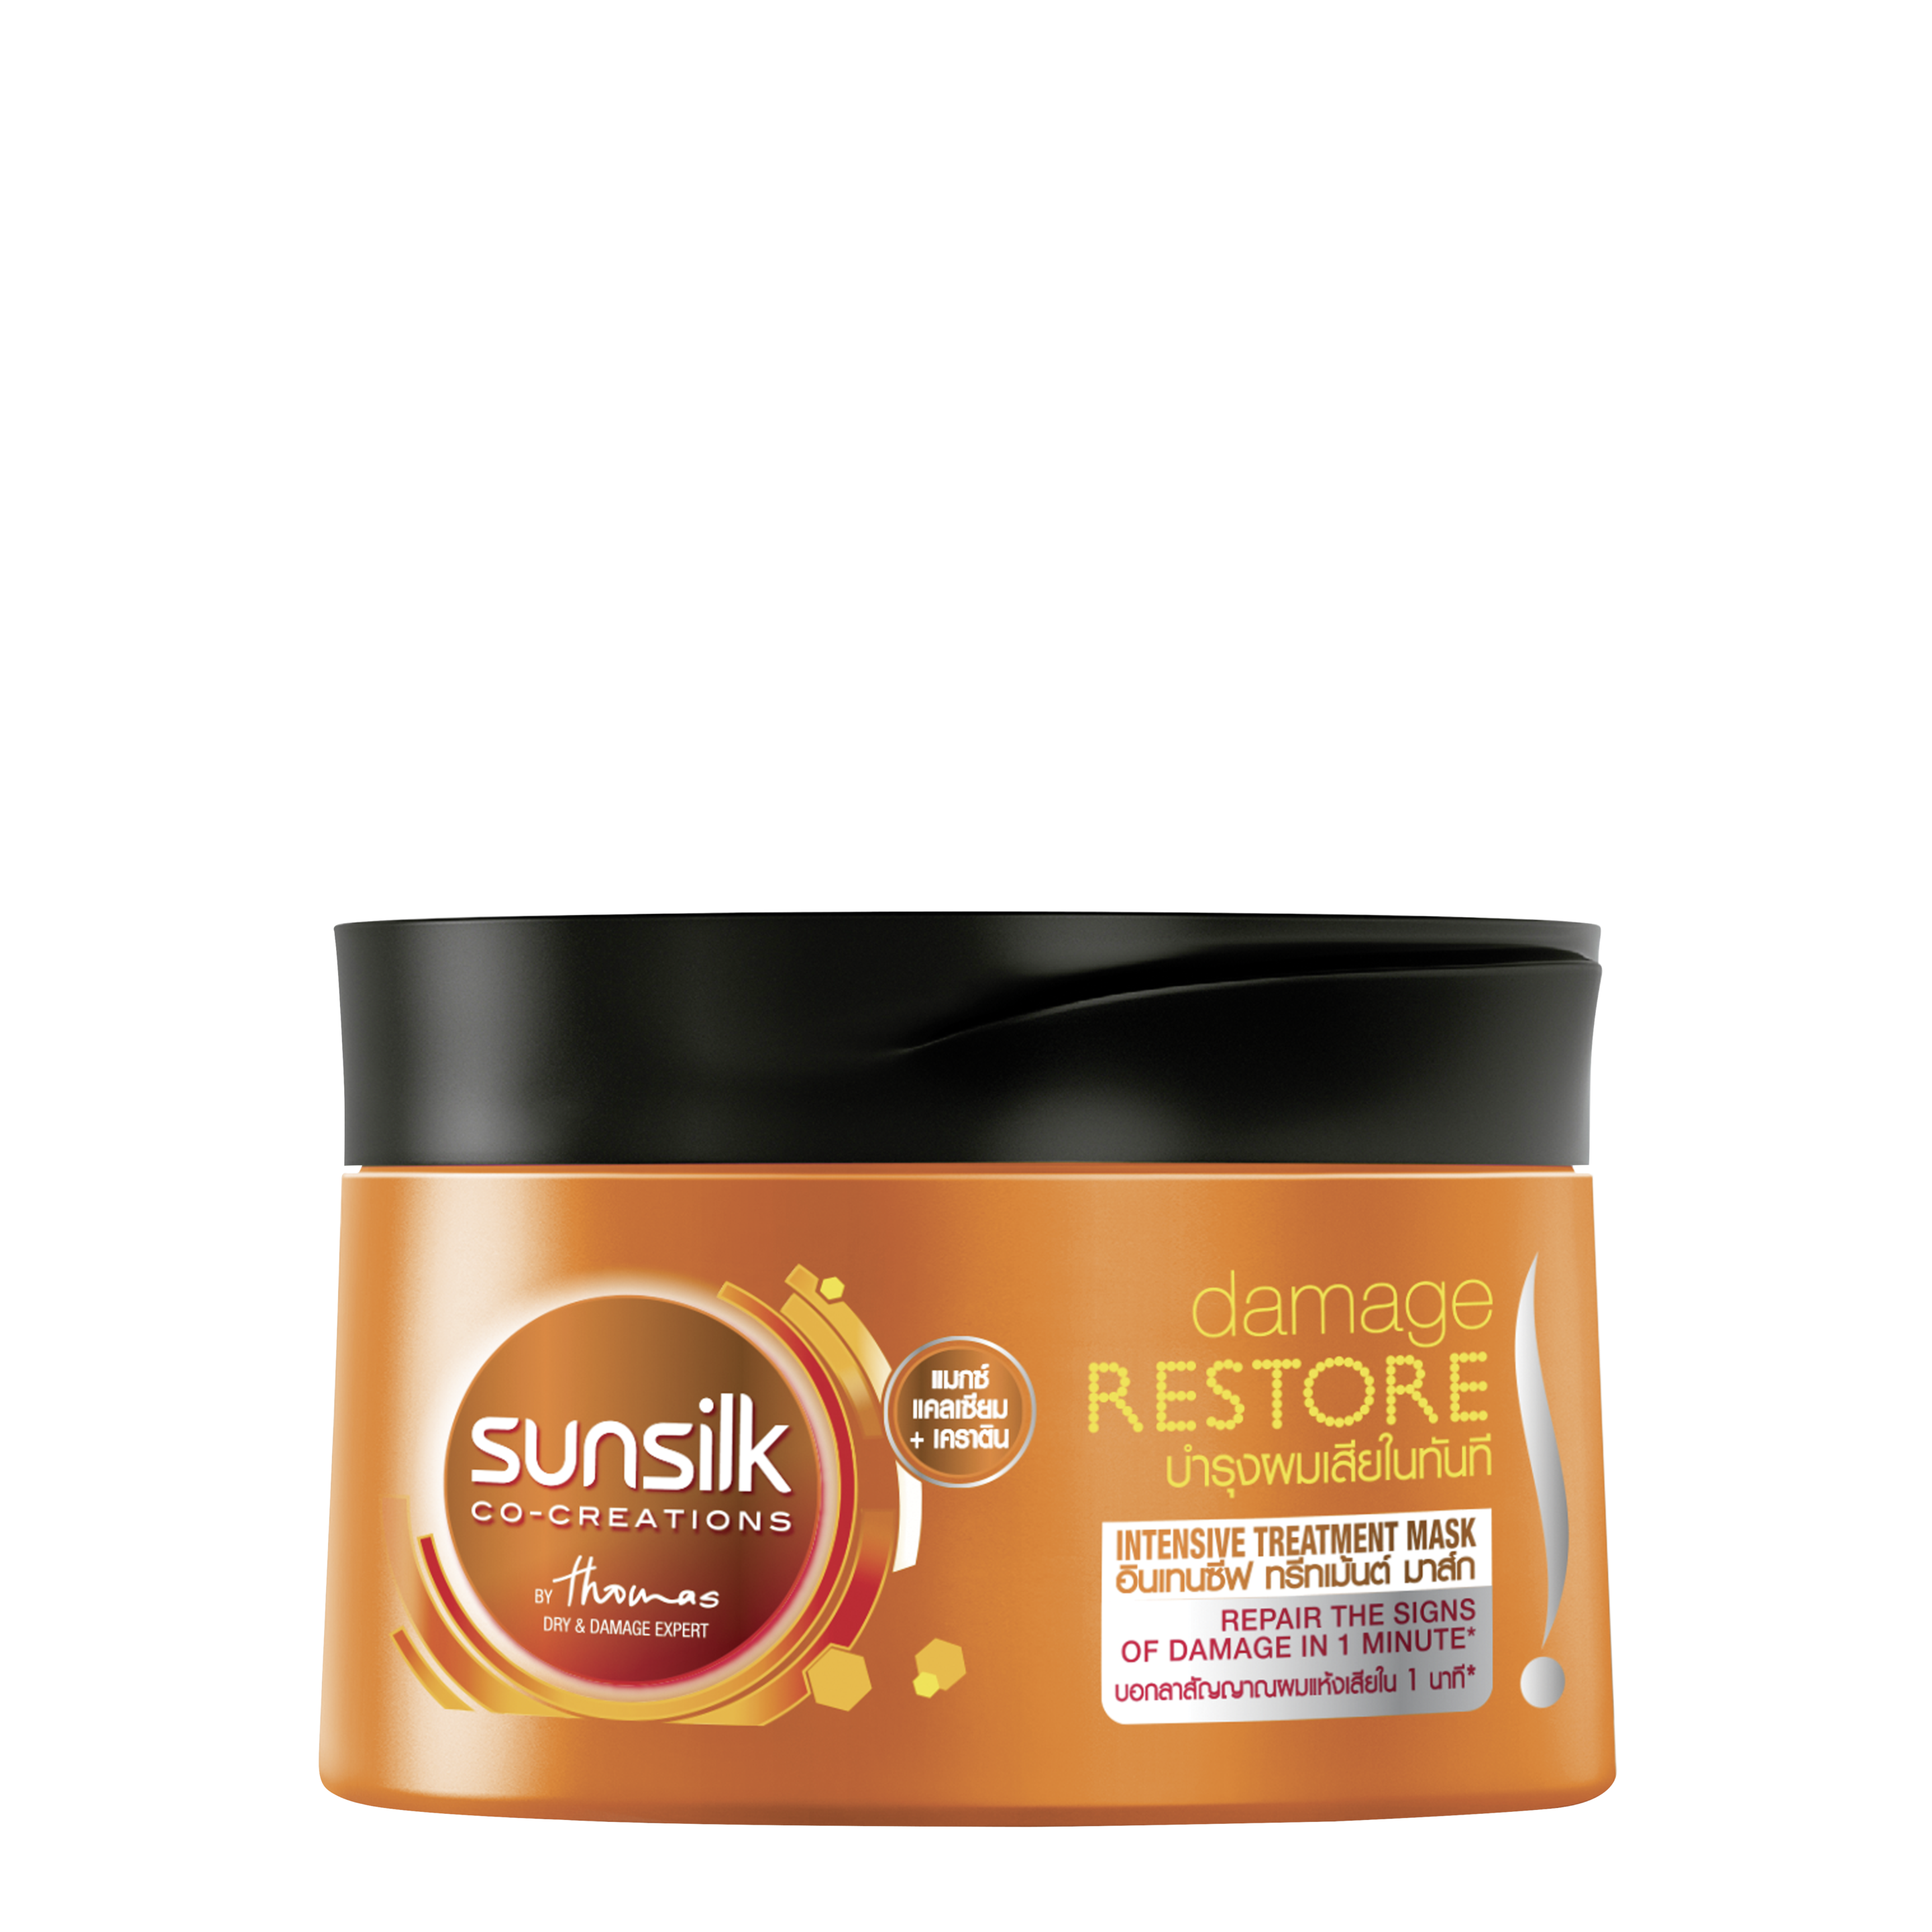 Sunsilk Damage Restore Intensive Treatment Mask 200g front of pack image